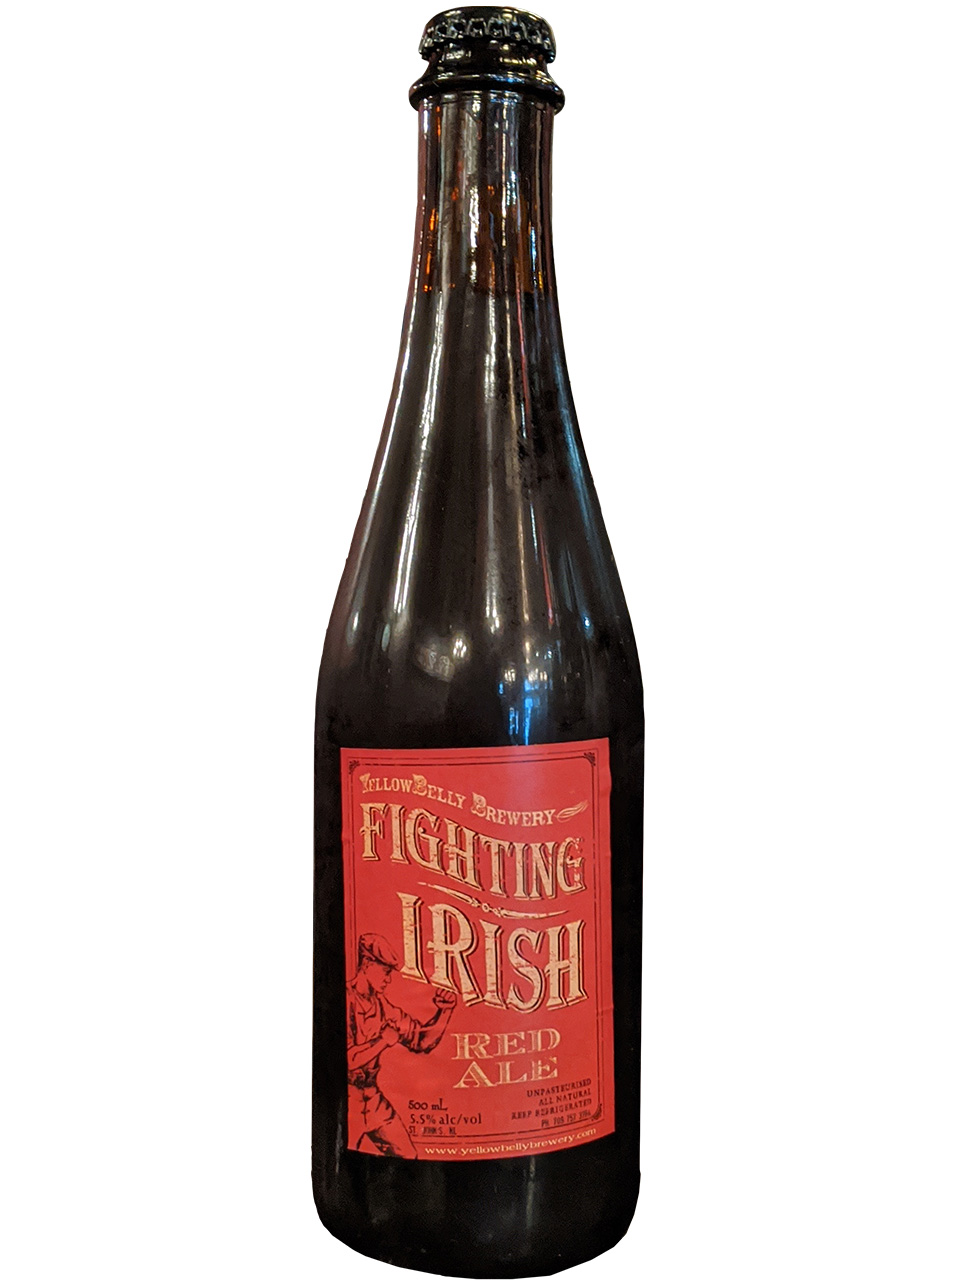 YellowBelly Fighting Irish Red Ale 500ml Bottle